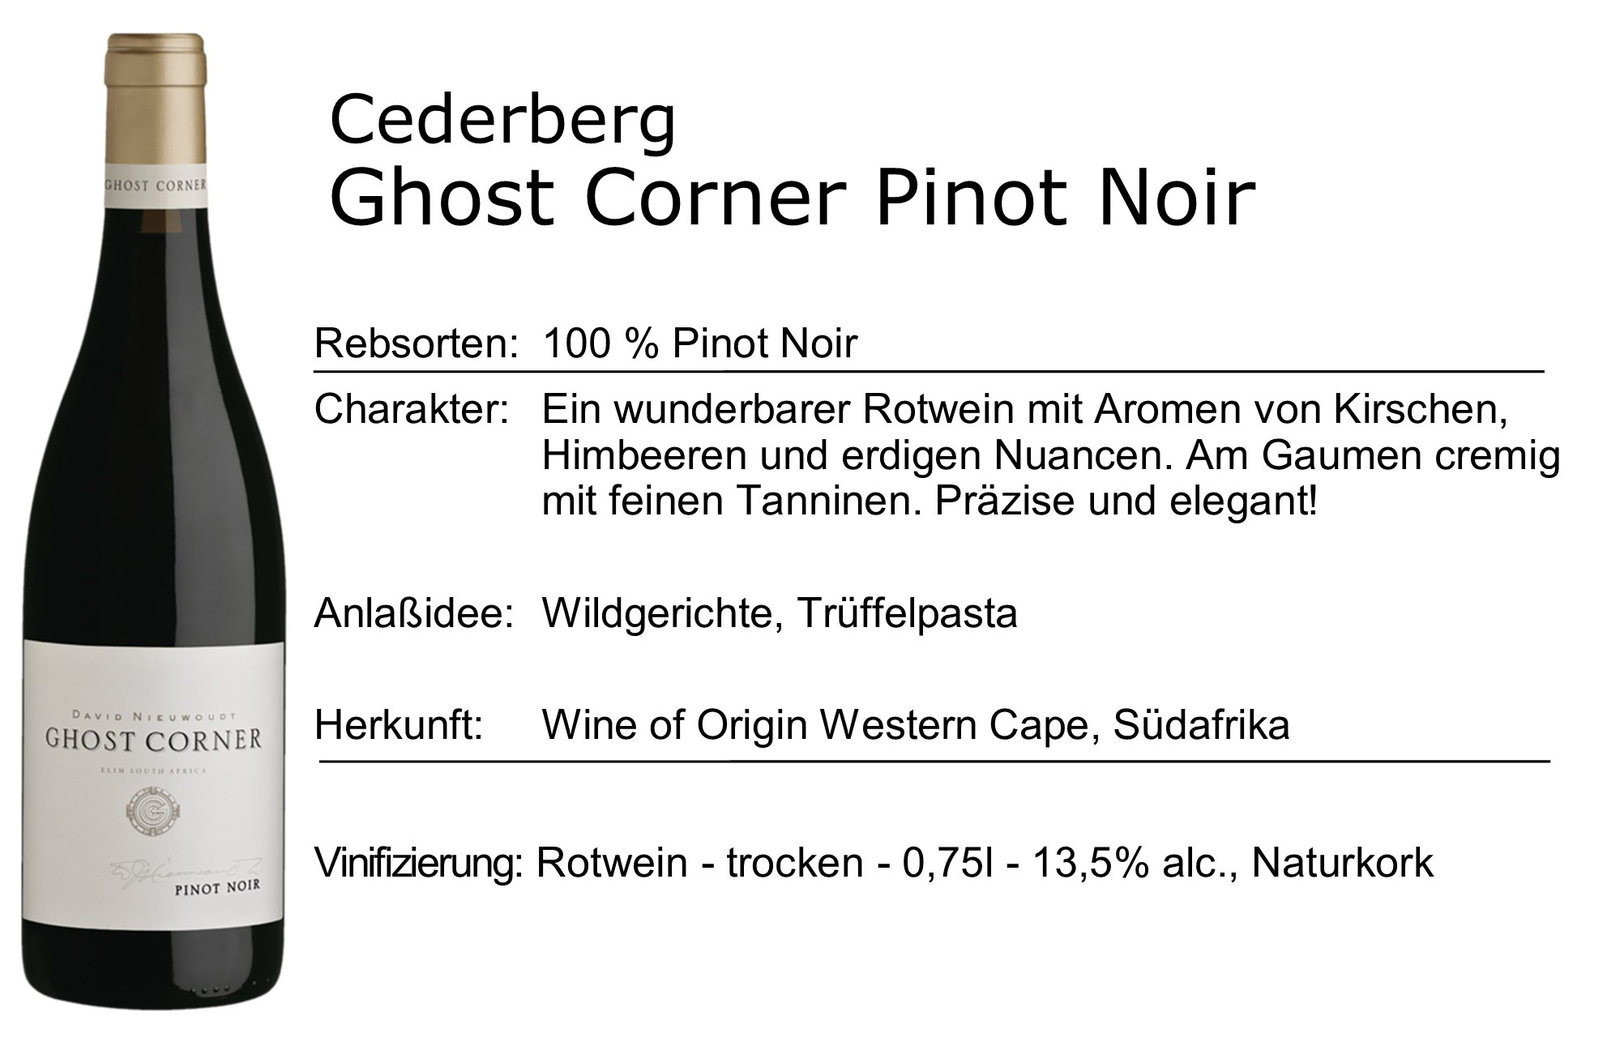 Cederberg Ghost Corner Pinot Noir 2018